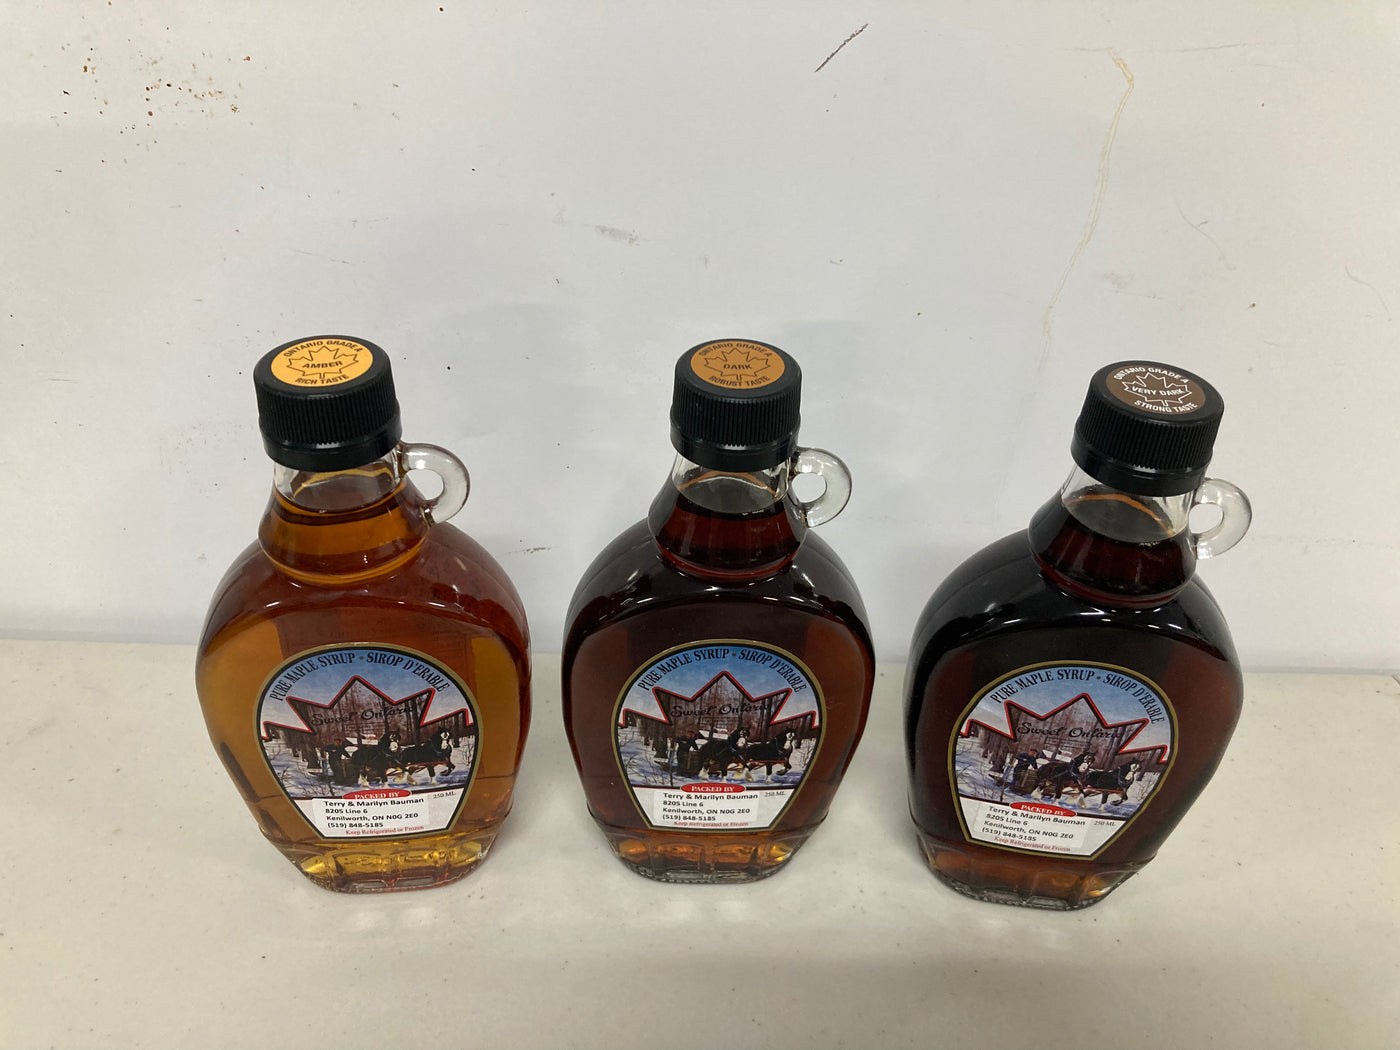 Very Dark Maple syrup